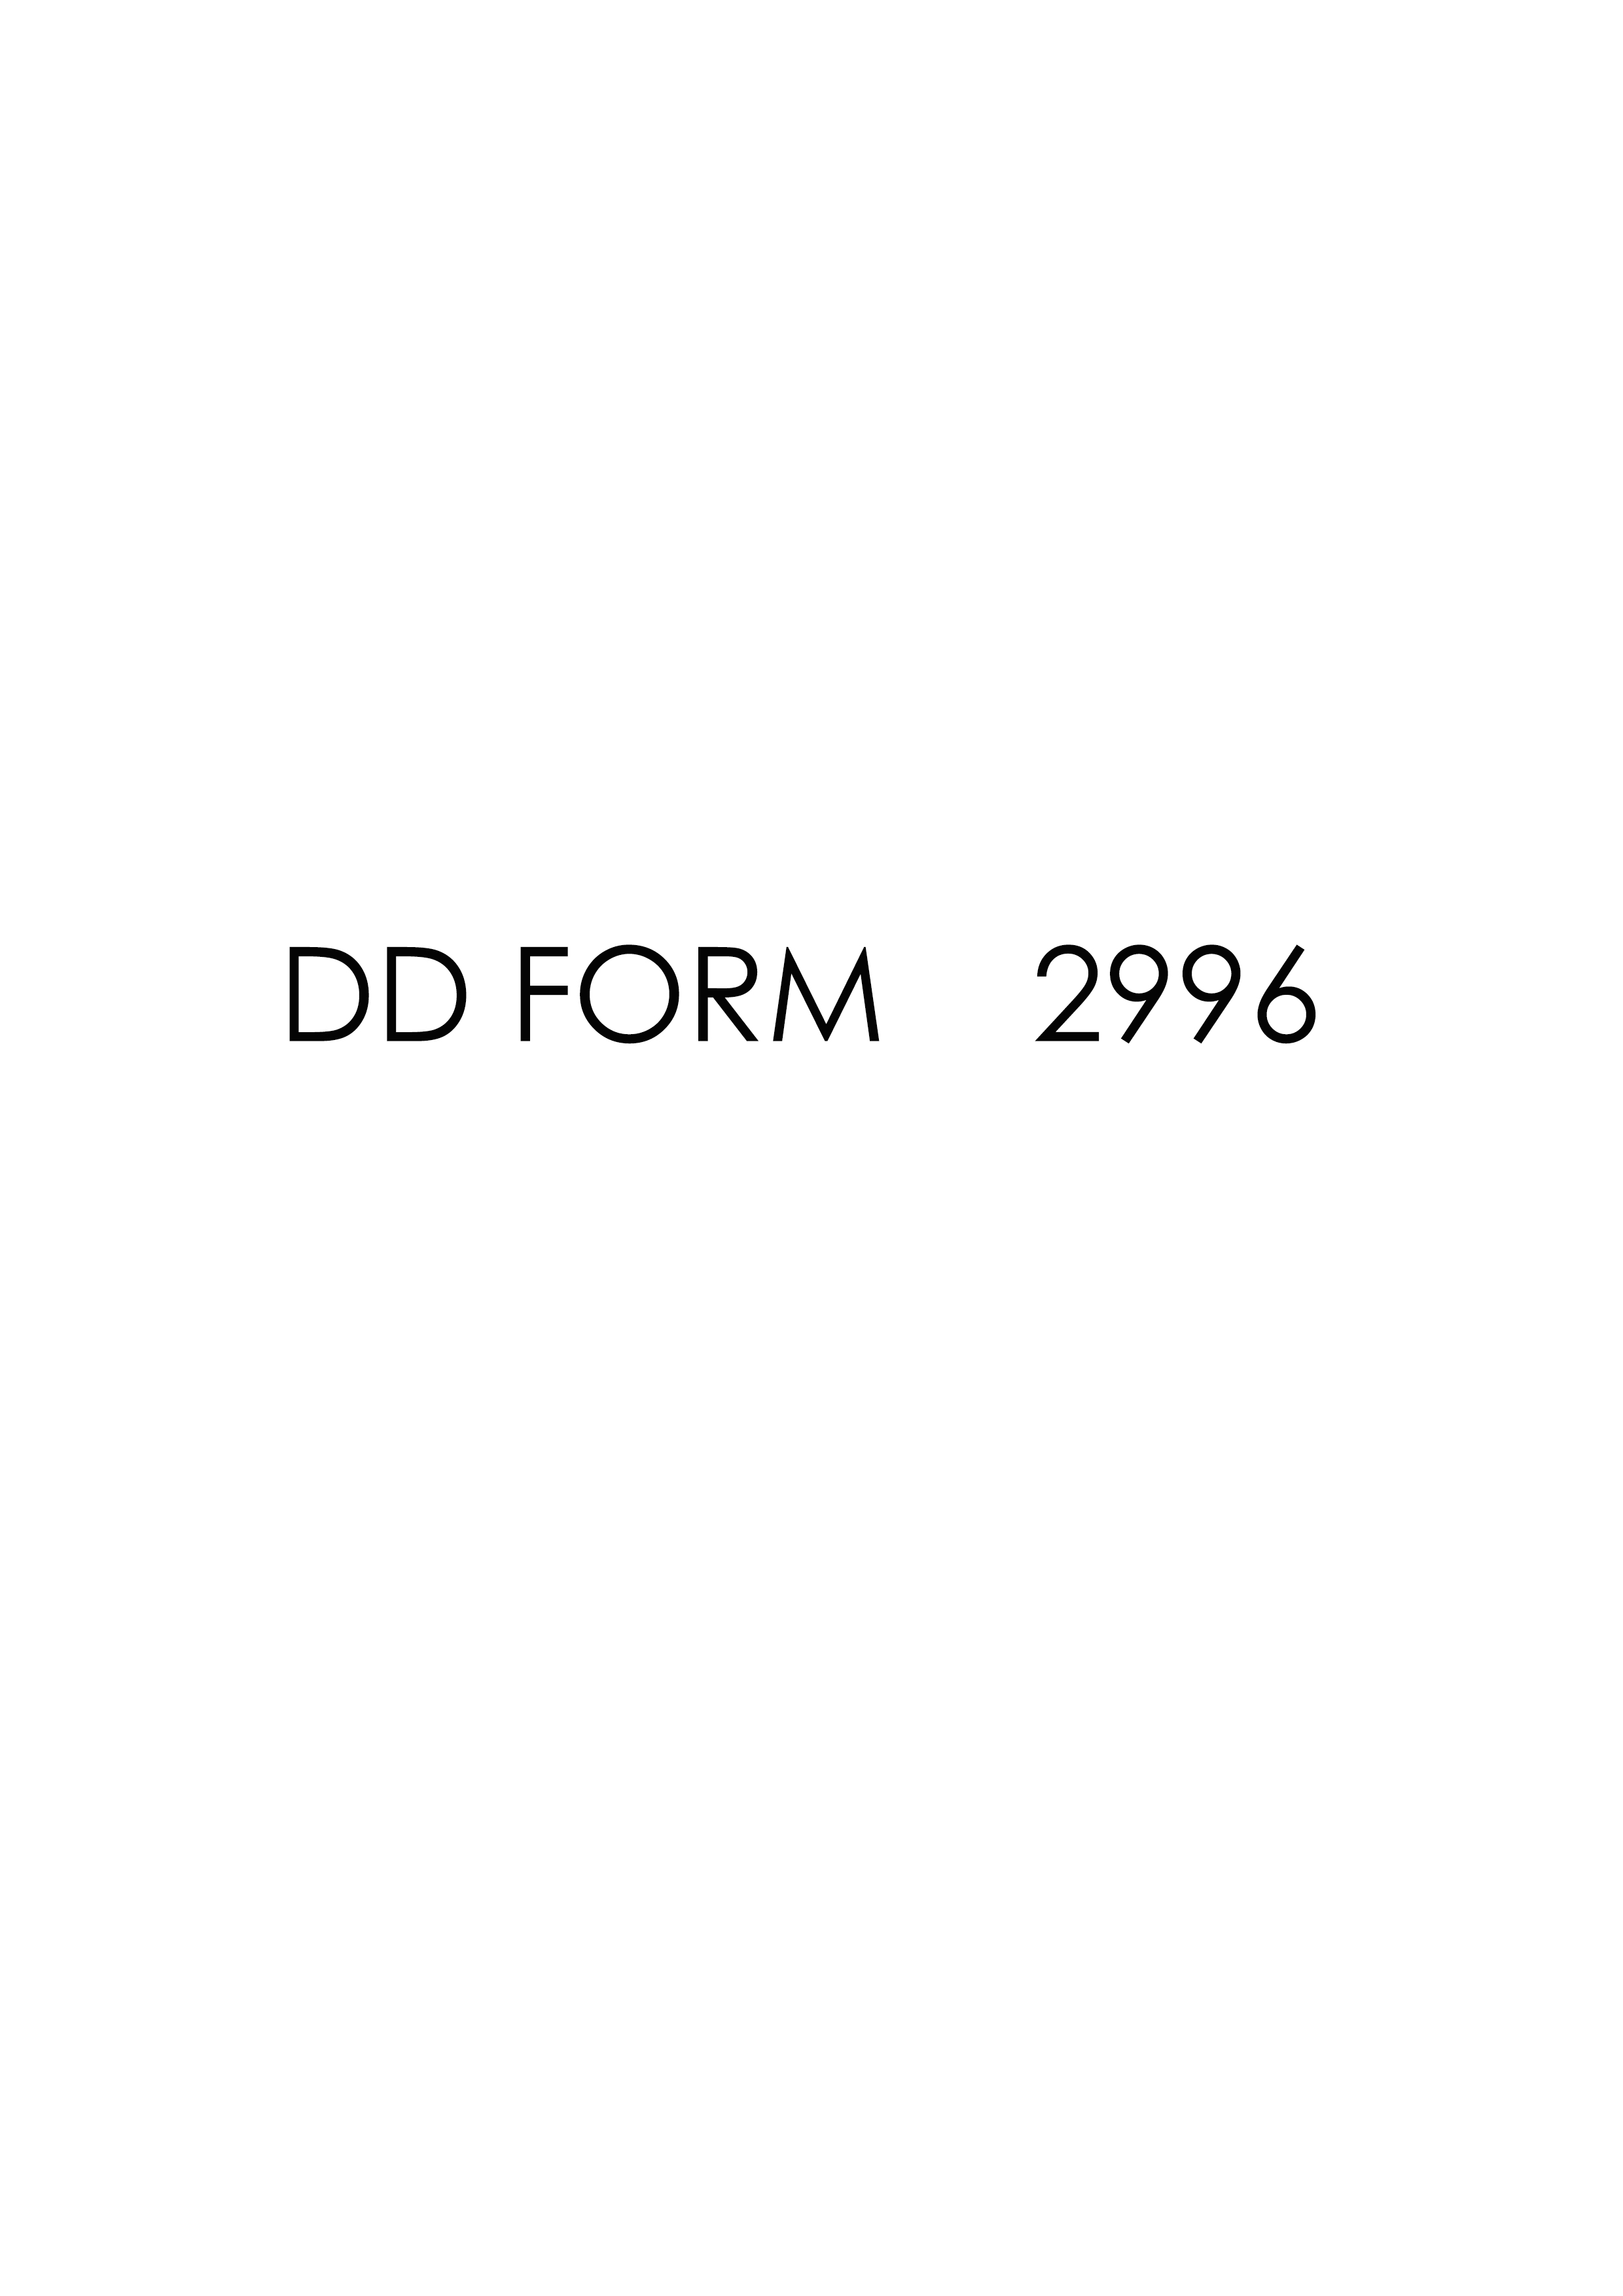 Download dd form 2996